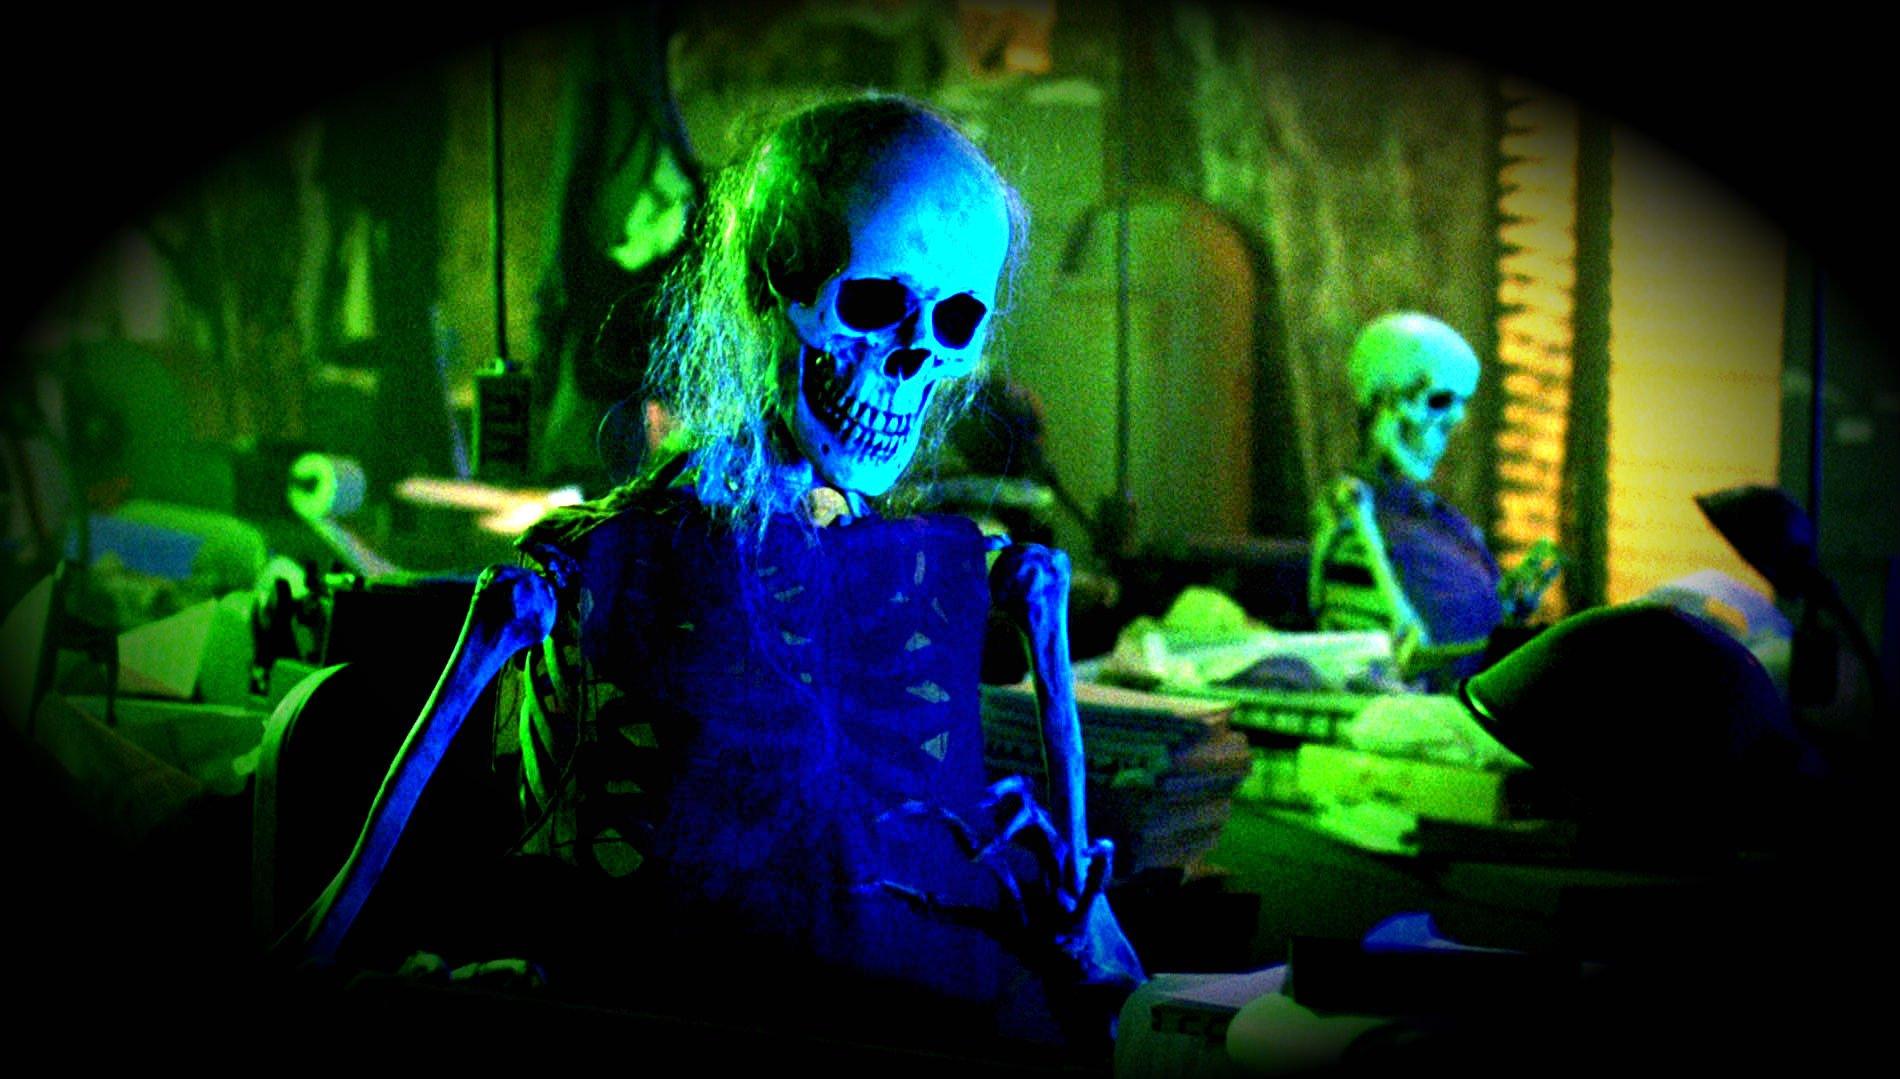 Free download dark movie film horror skull skeleton halloween